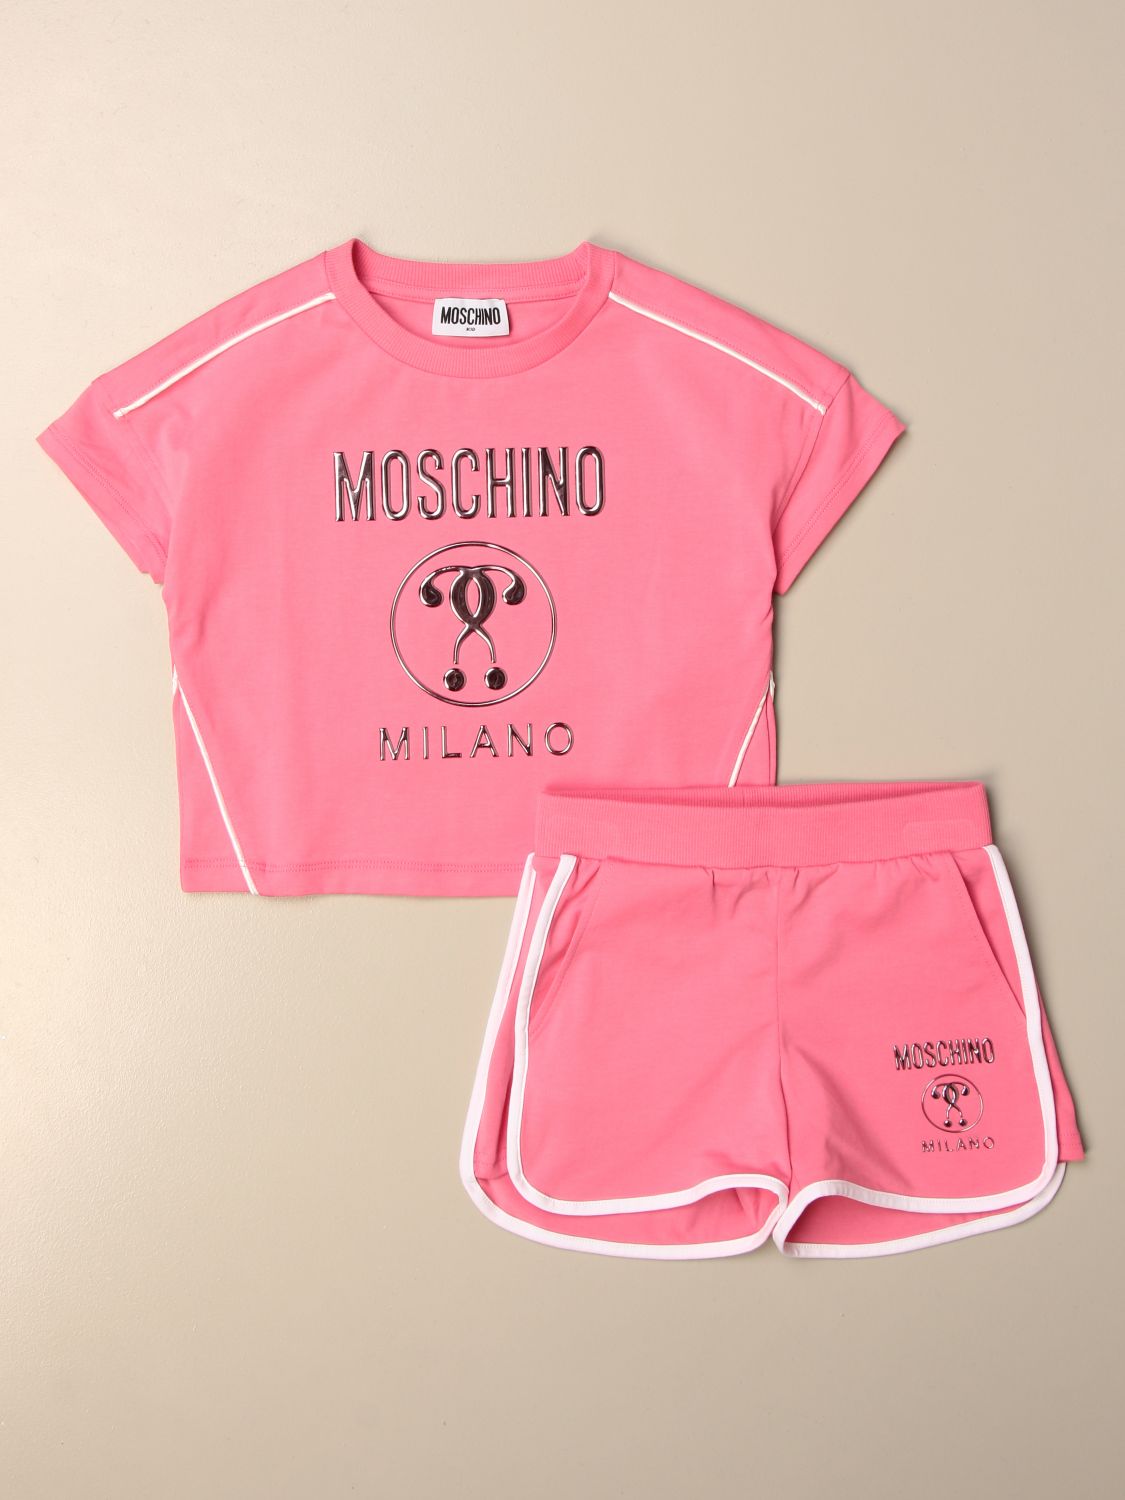 moschino jogging suit